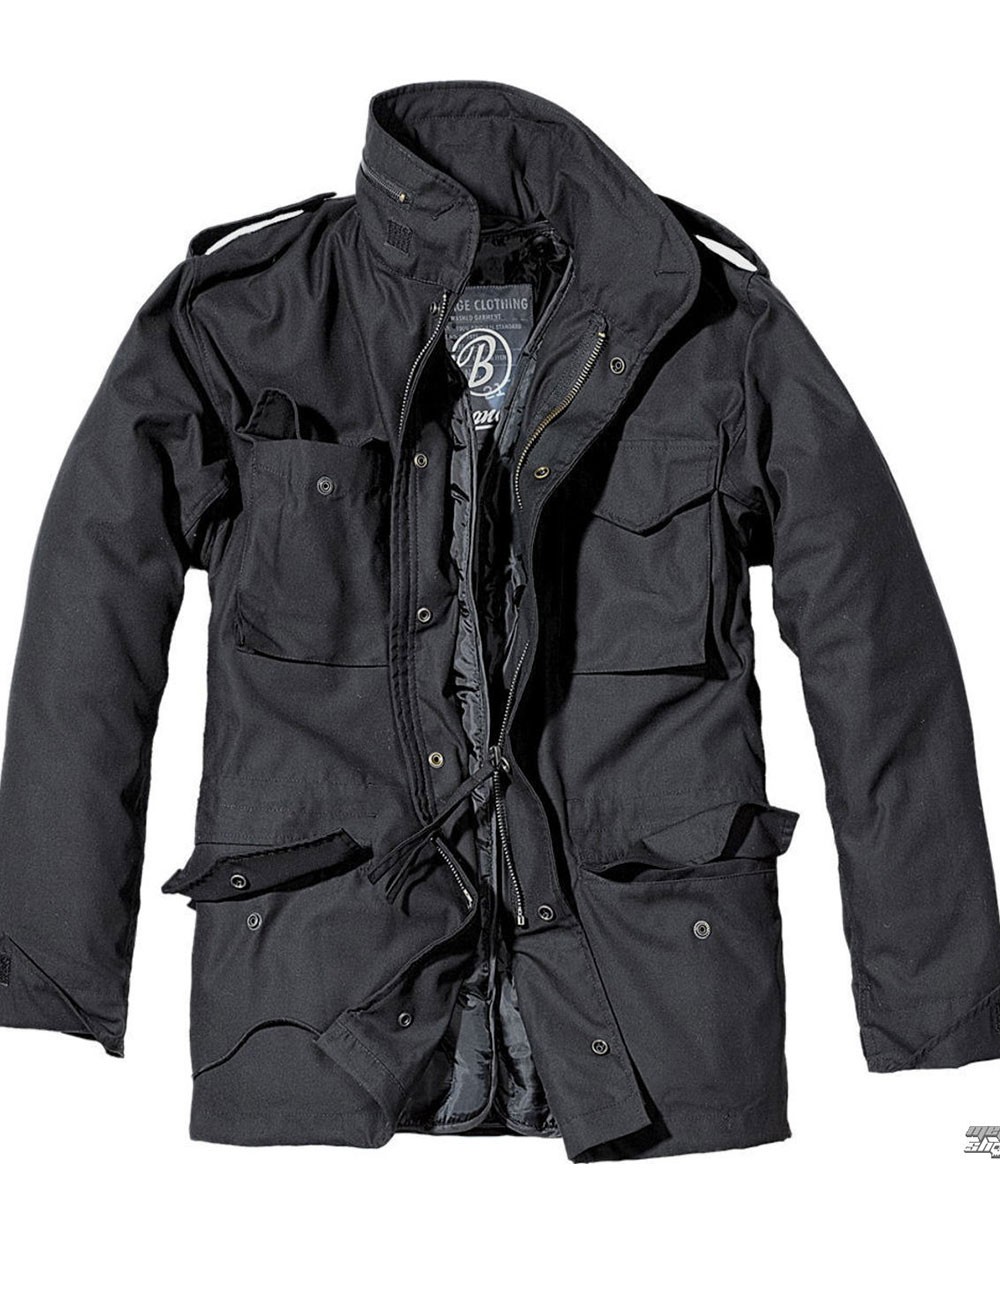 Classic M65 Giant Jacket Black 31011-01 Sale